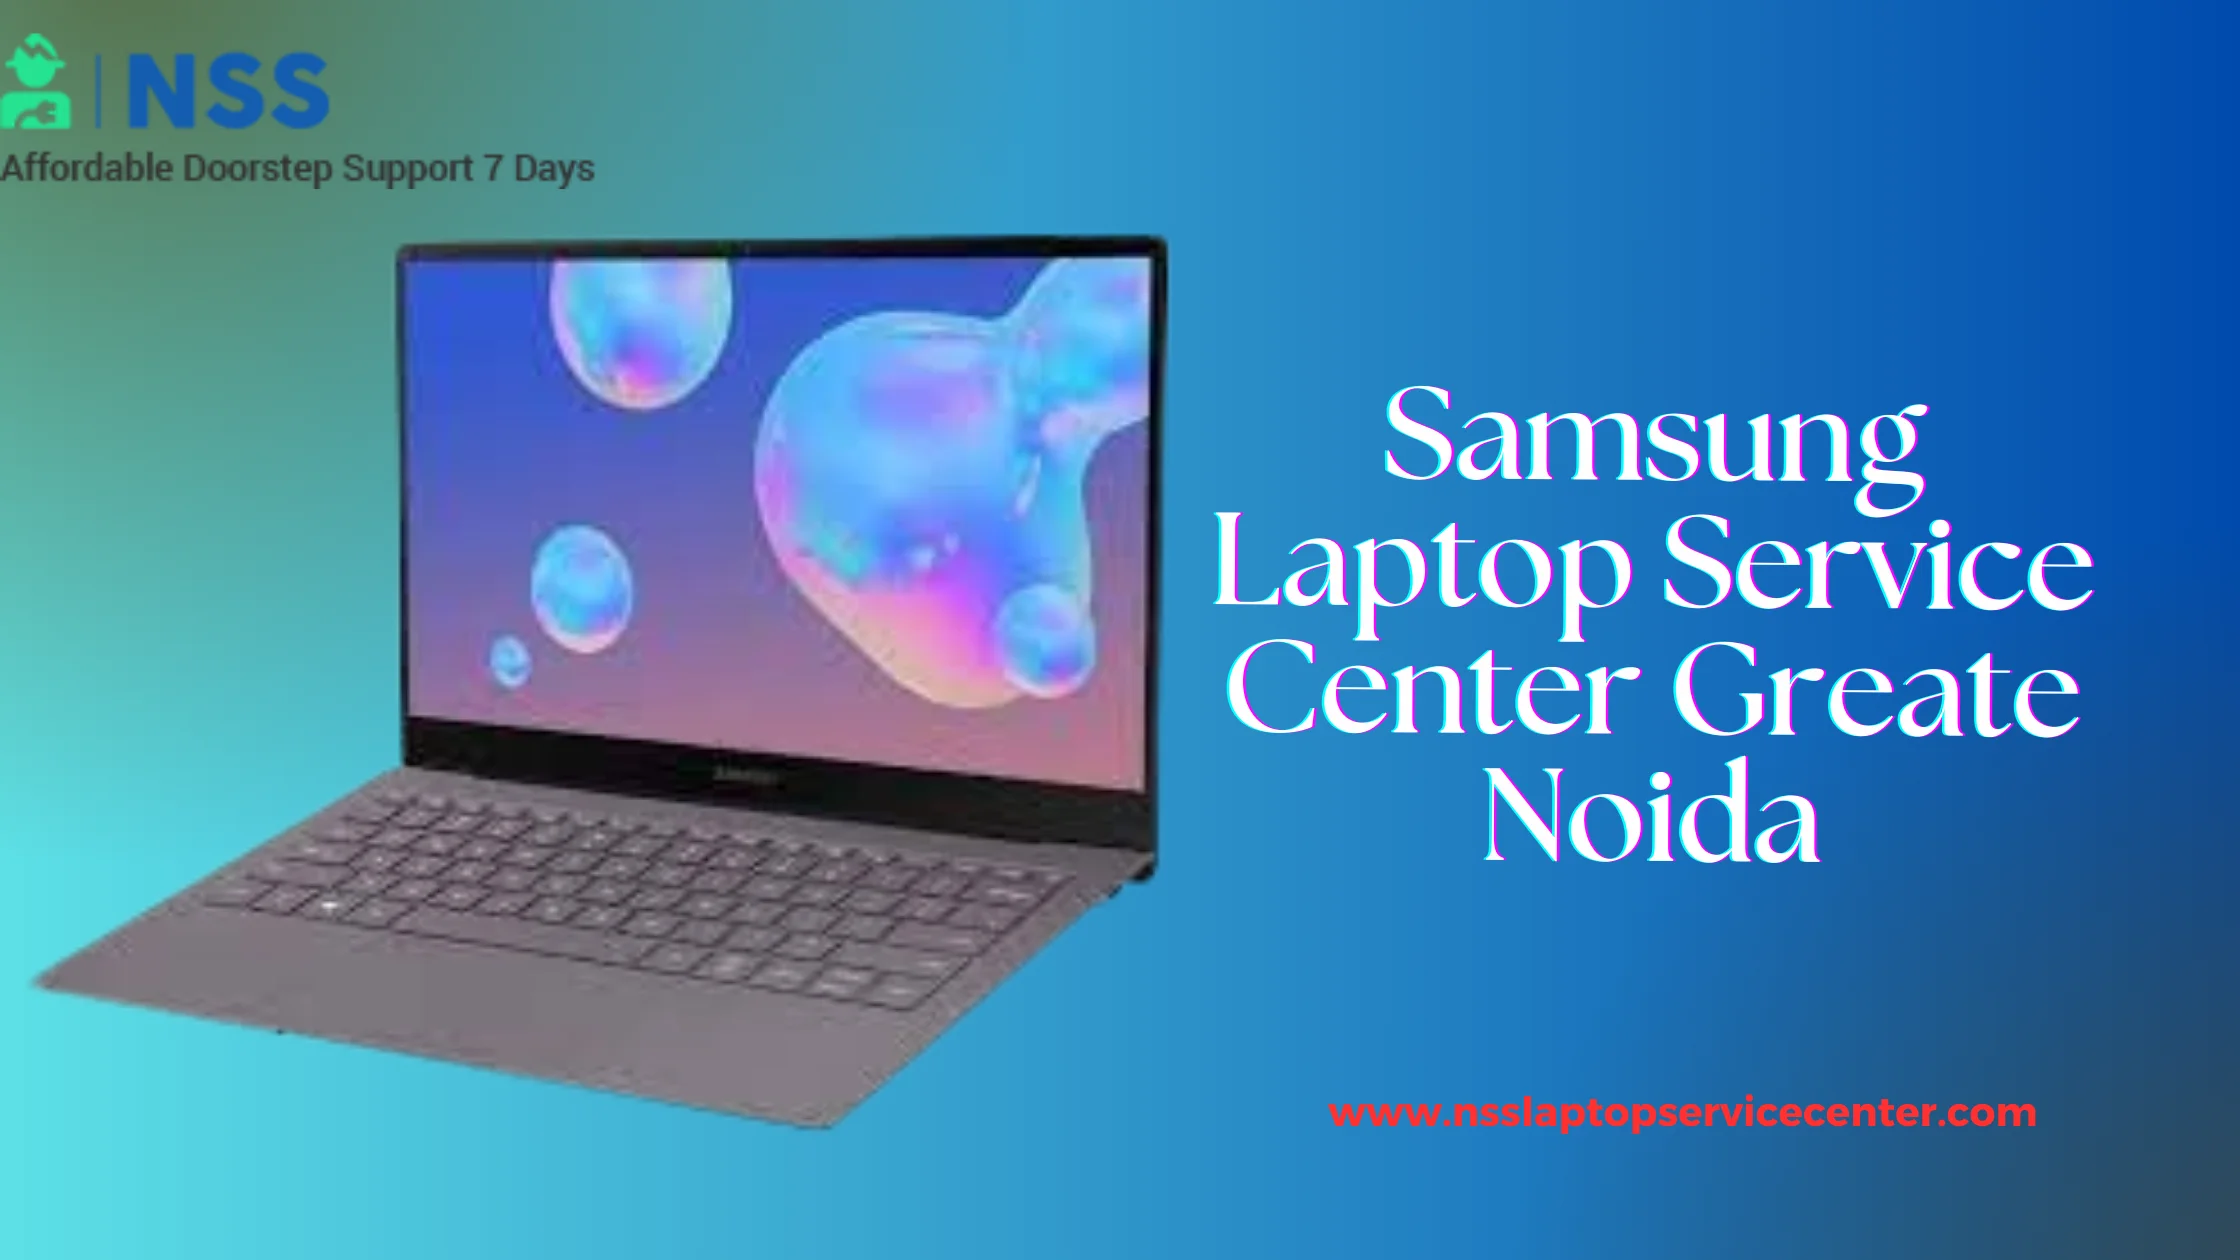 Samsung Laptop Service Center In Greater Noida